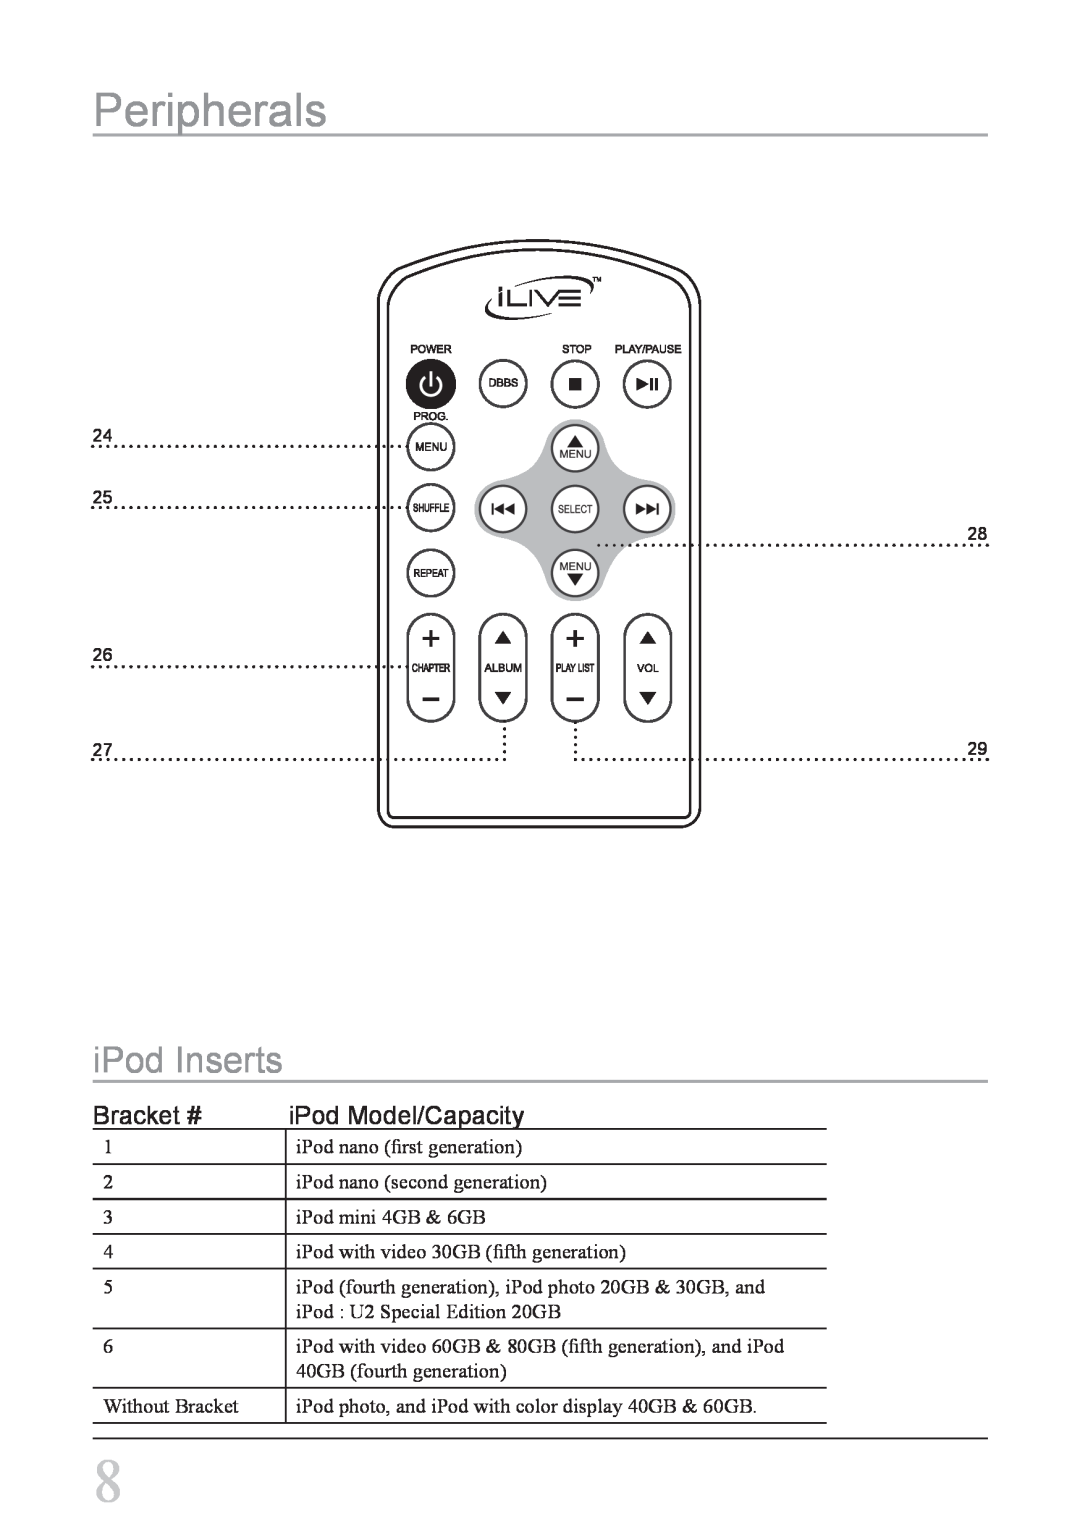 iLive IBCD2817DP instruction manual Peripherals, iPod Inserts, Bracket #, iPod Model/Capacity 